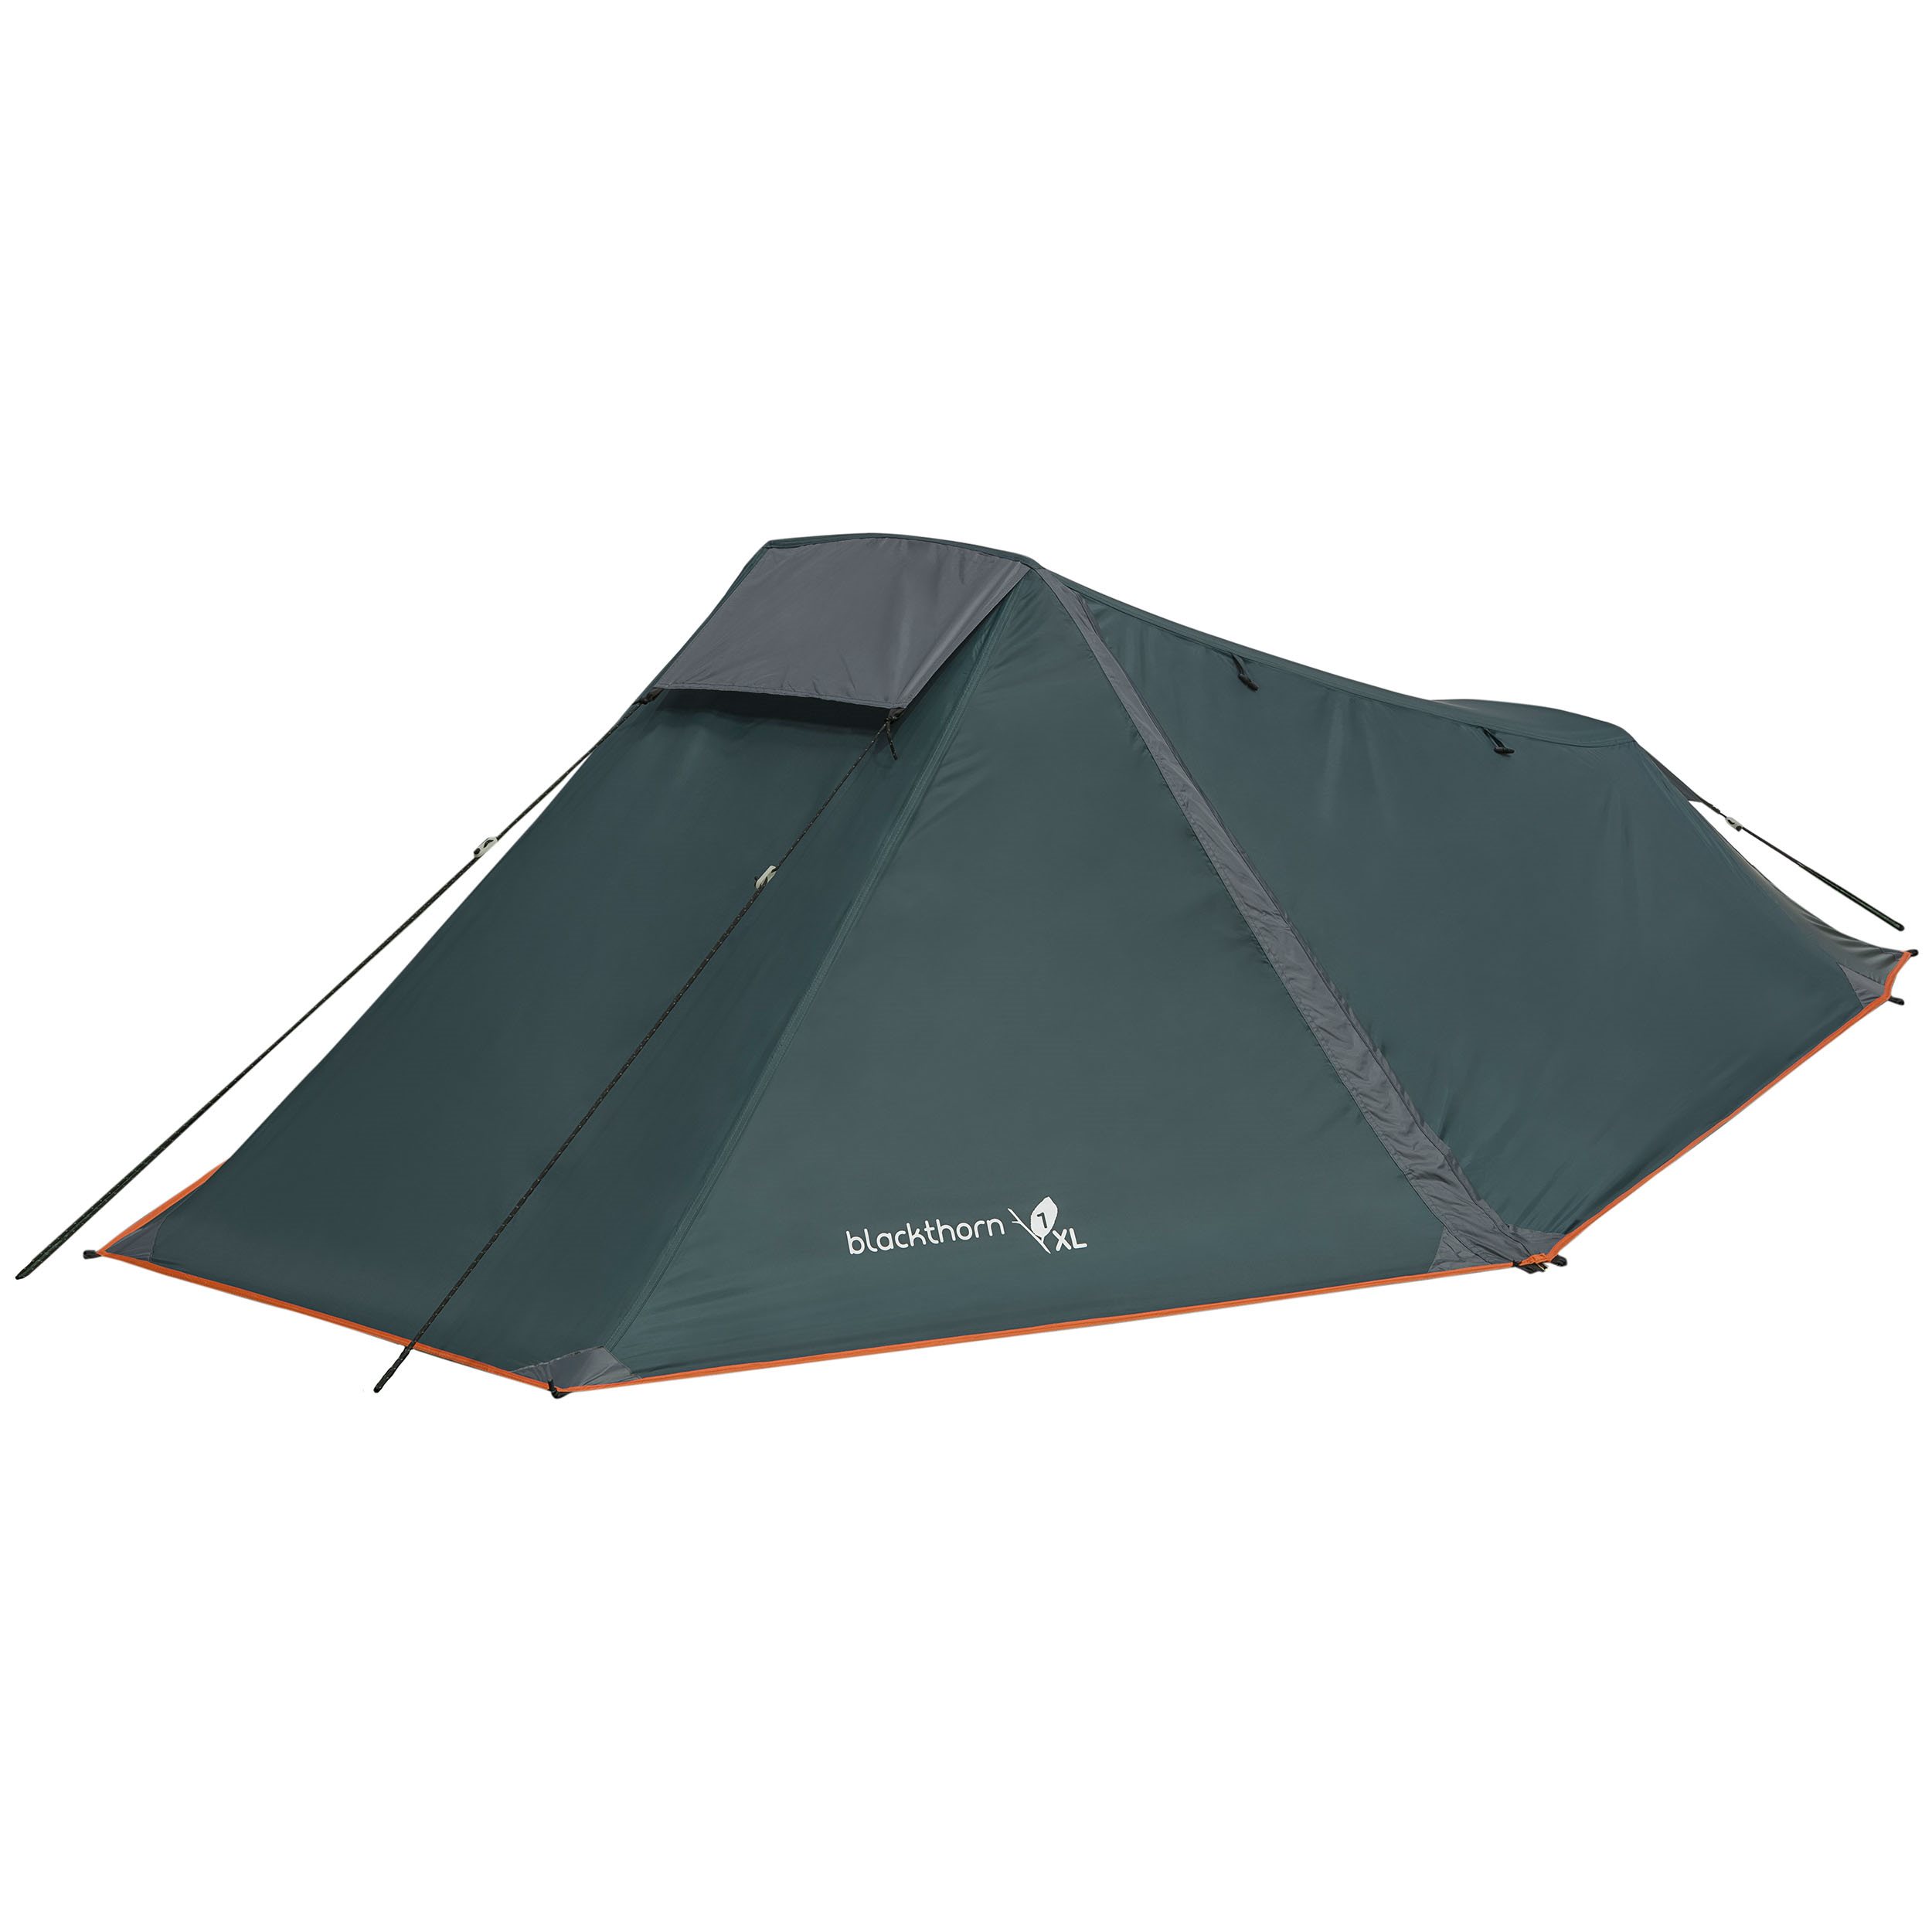 Tent BLACKTHORN XL 1 Person HUNTER GREEN HIGHLANDER TEN131XL-HG L-11